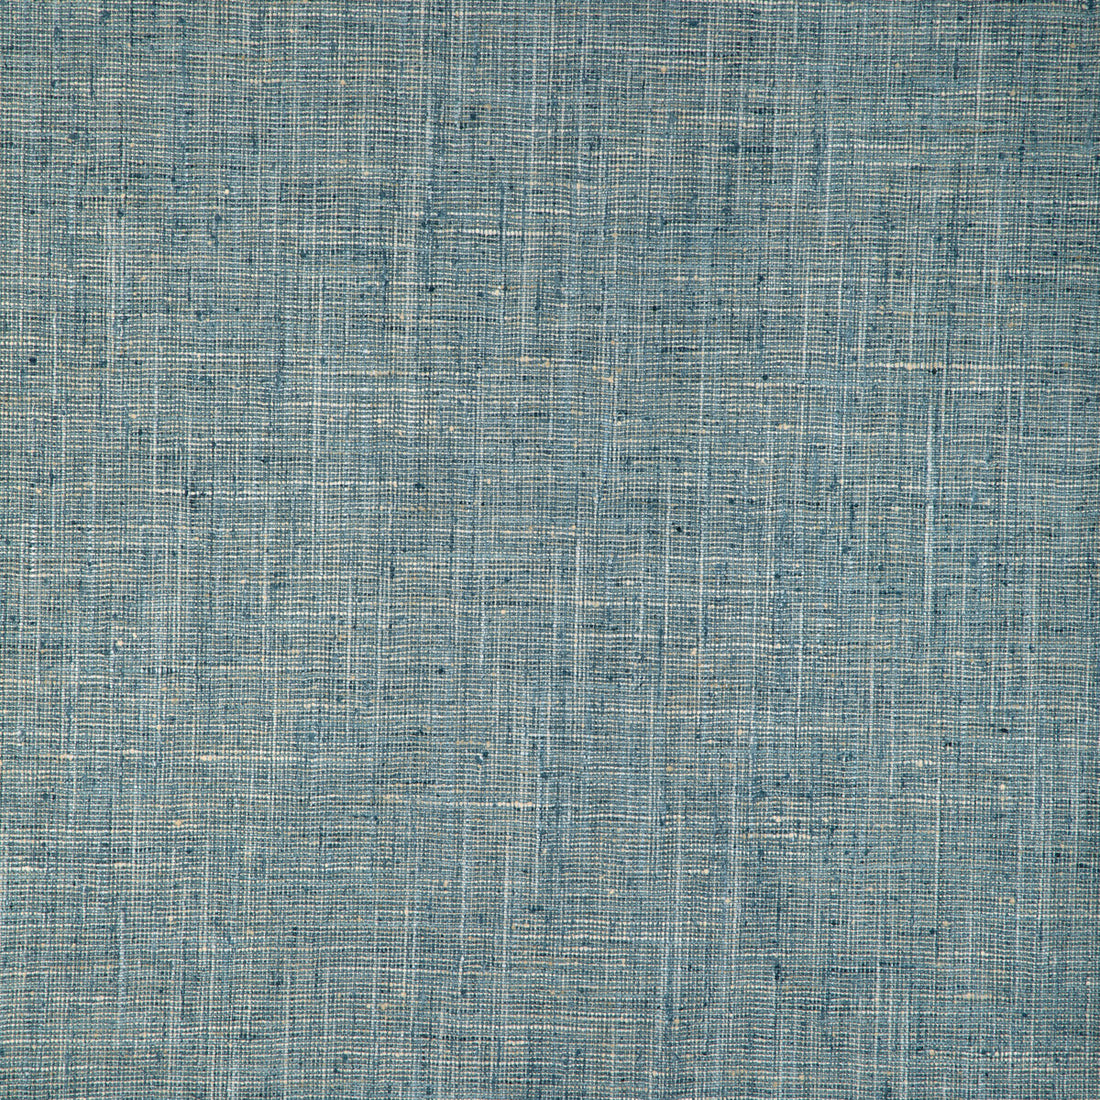 Kravet Smart fabric in 34983-15 color - pattern 34983.15.0 - by Kravet Smart